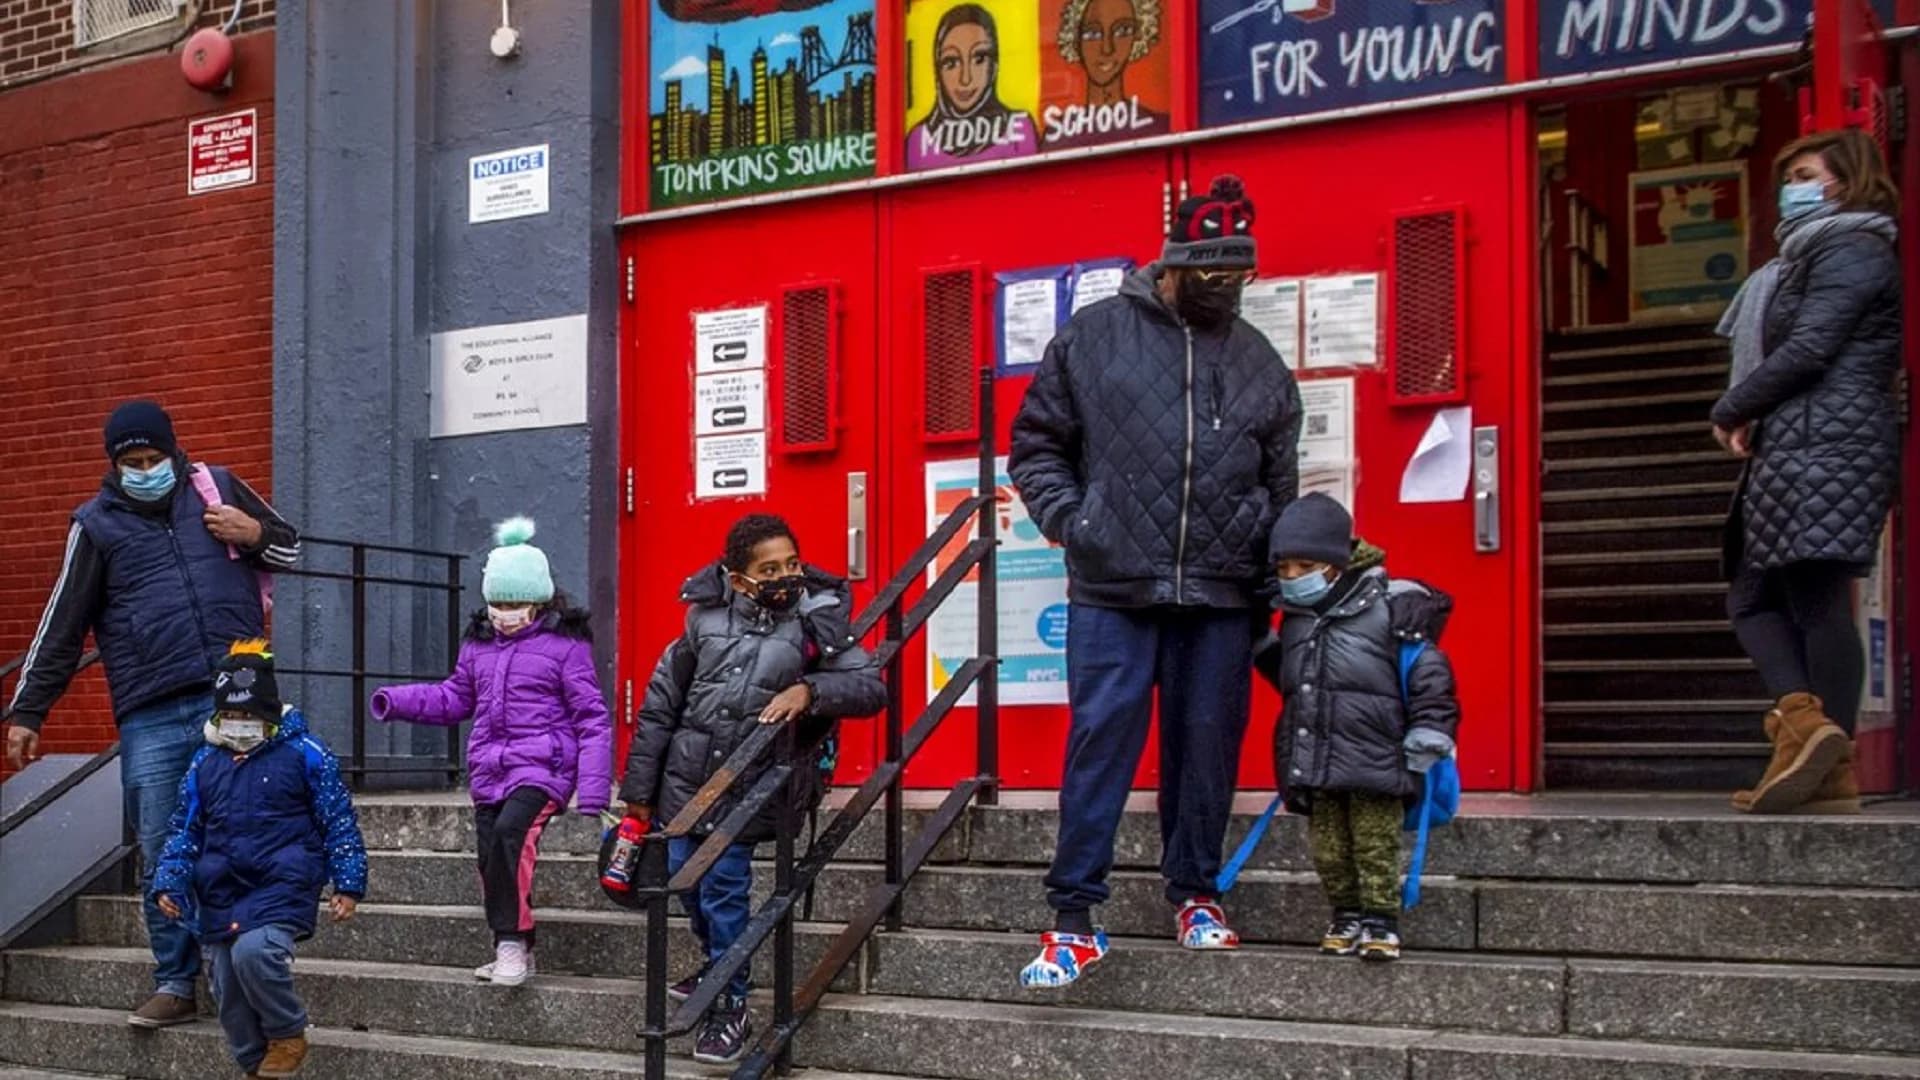 New York poised to strengthen oversight of nonpublic schools